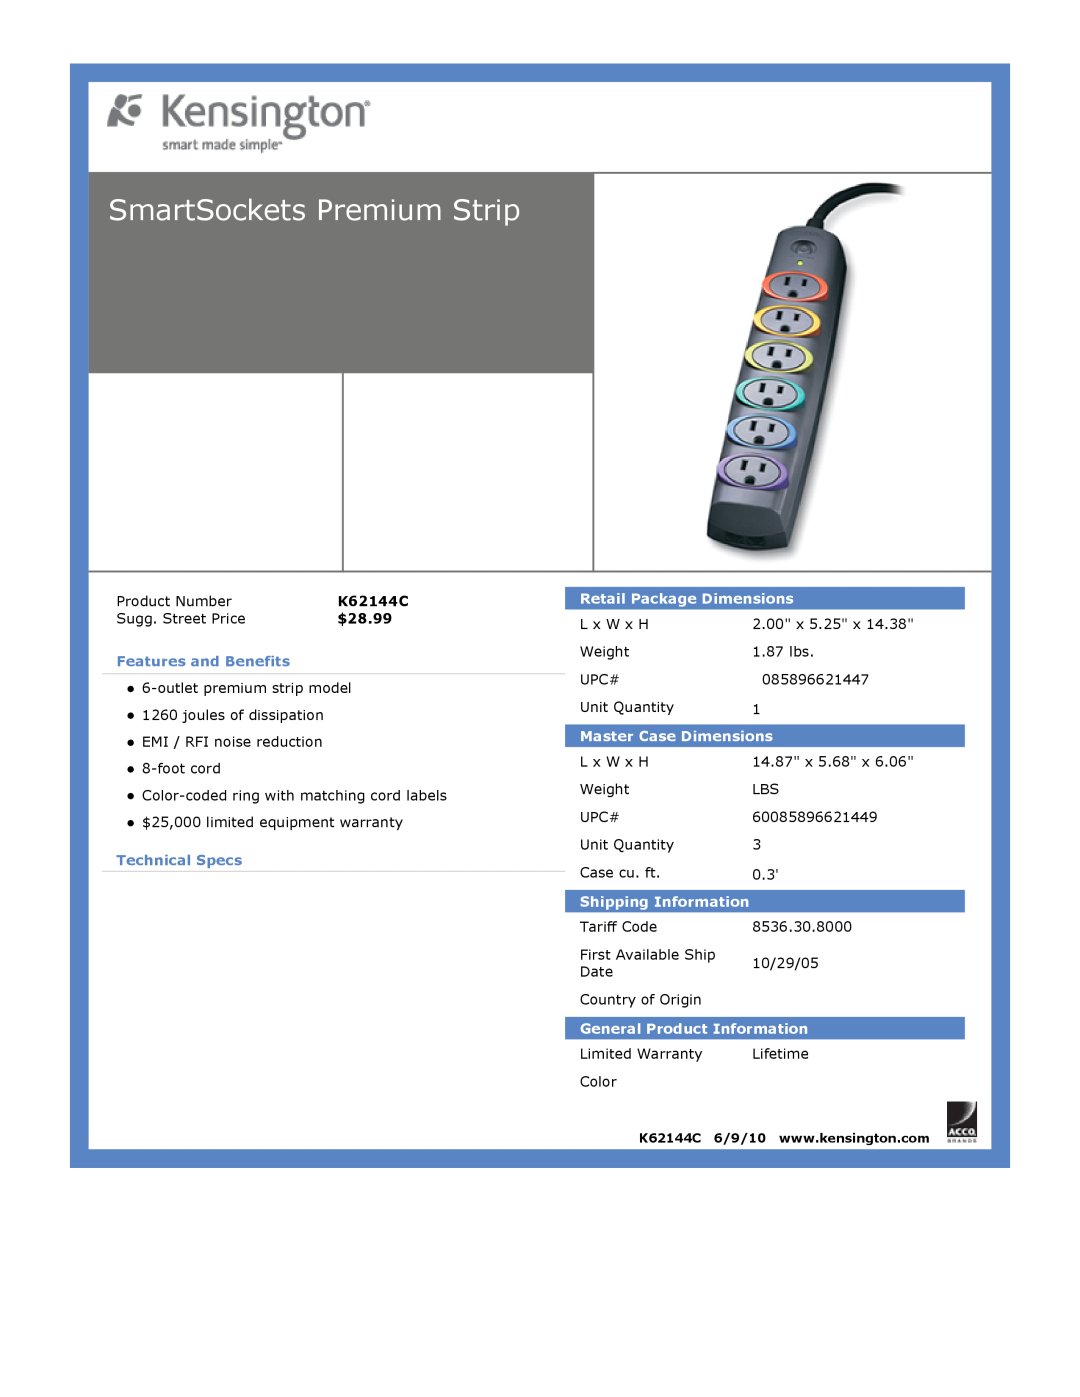 Kensington EU64325 SmartSockets Premium Strip, $28.99, Features and Benefits, Technical Specs, Retail Package Dimensions 